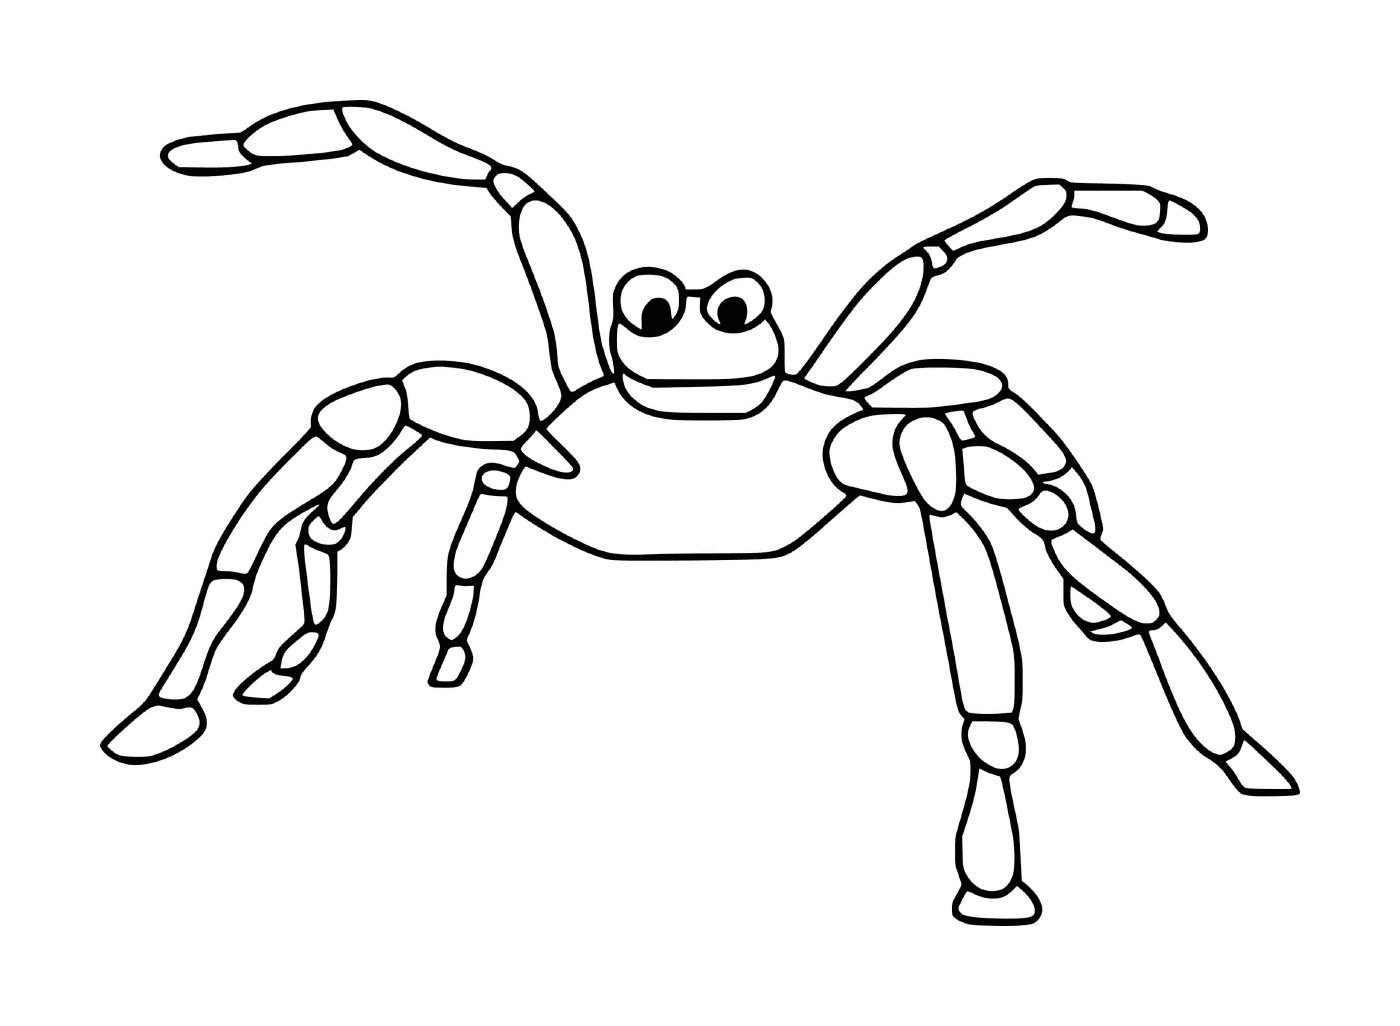   Une araignée effrayante 